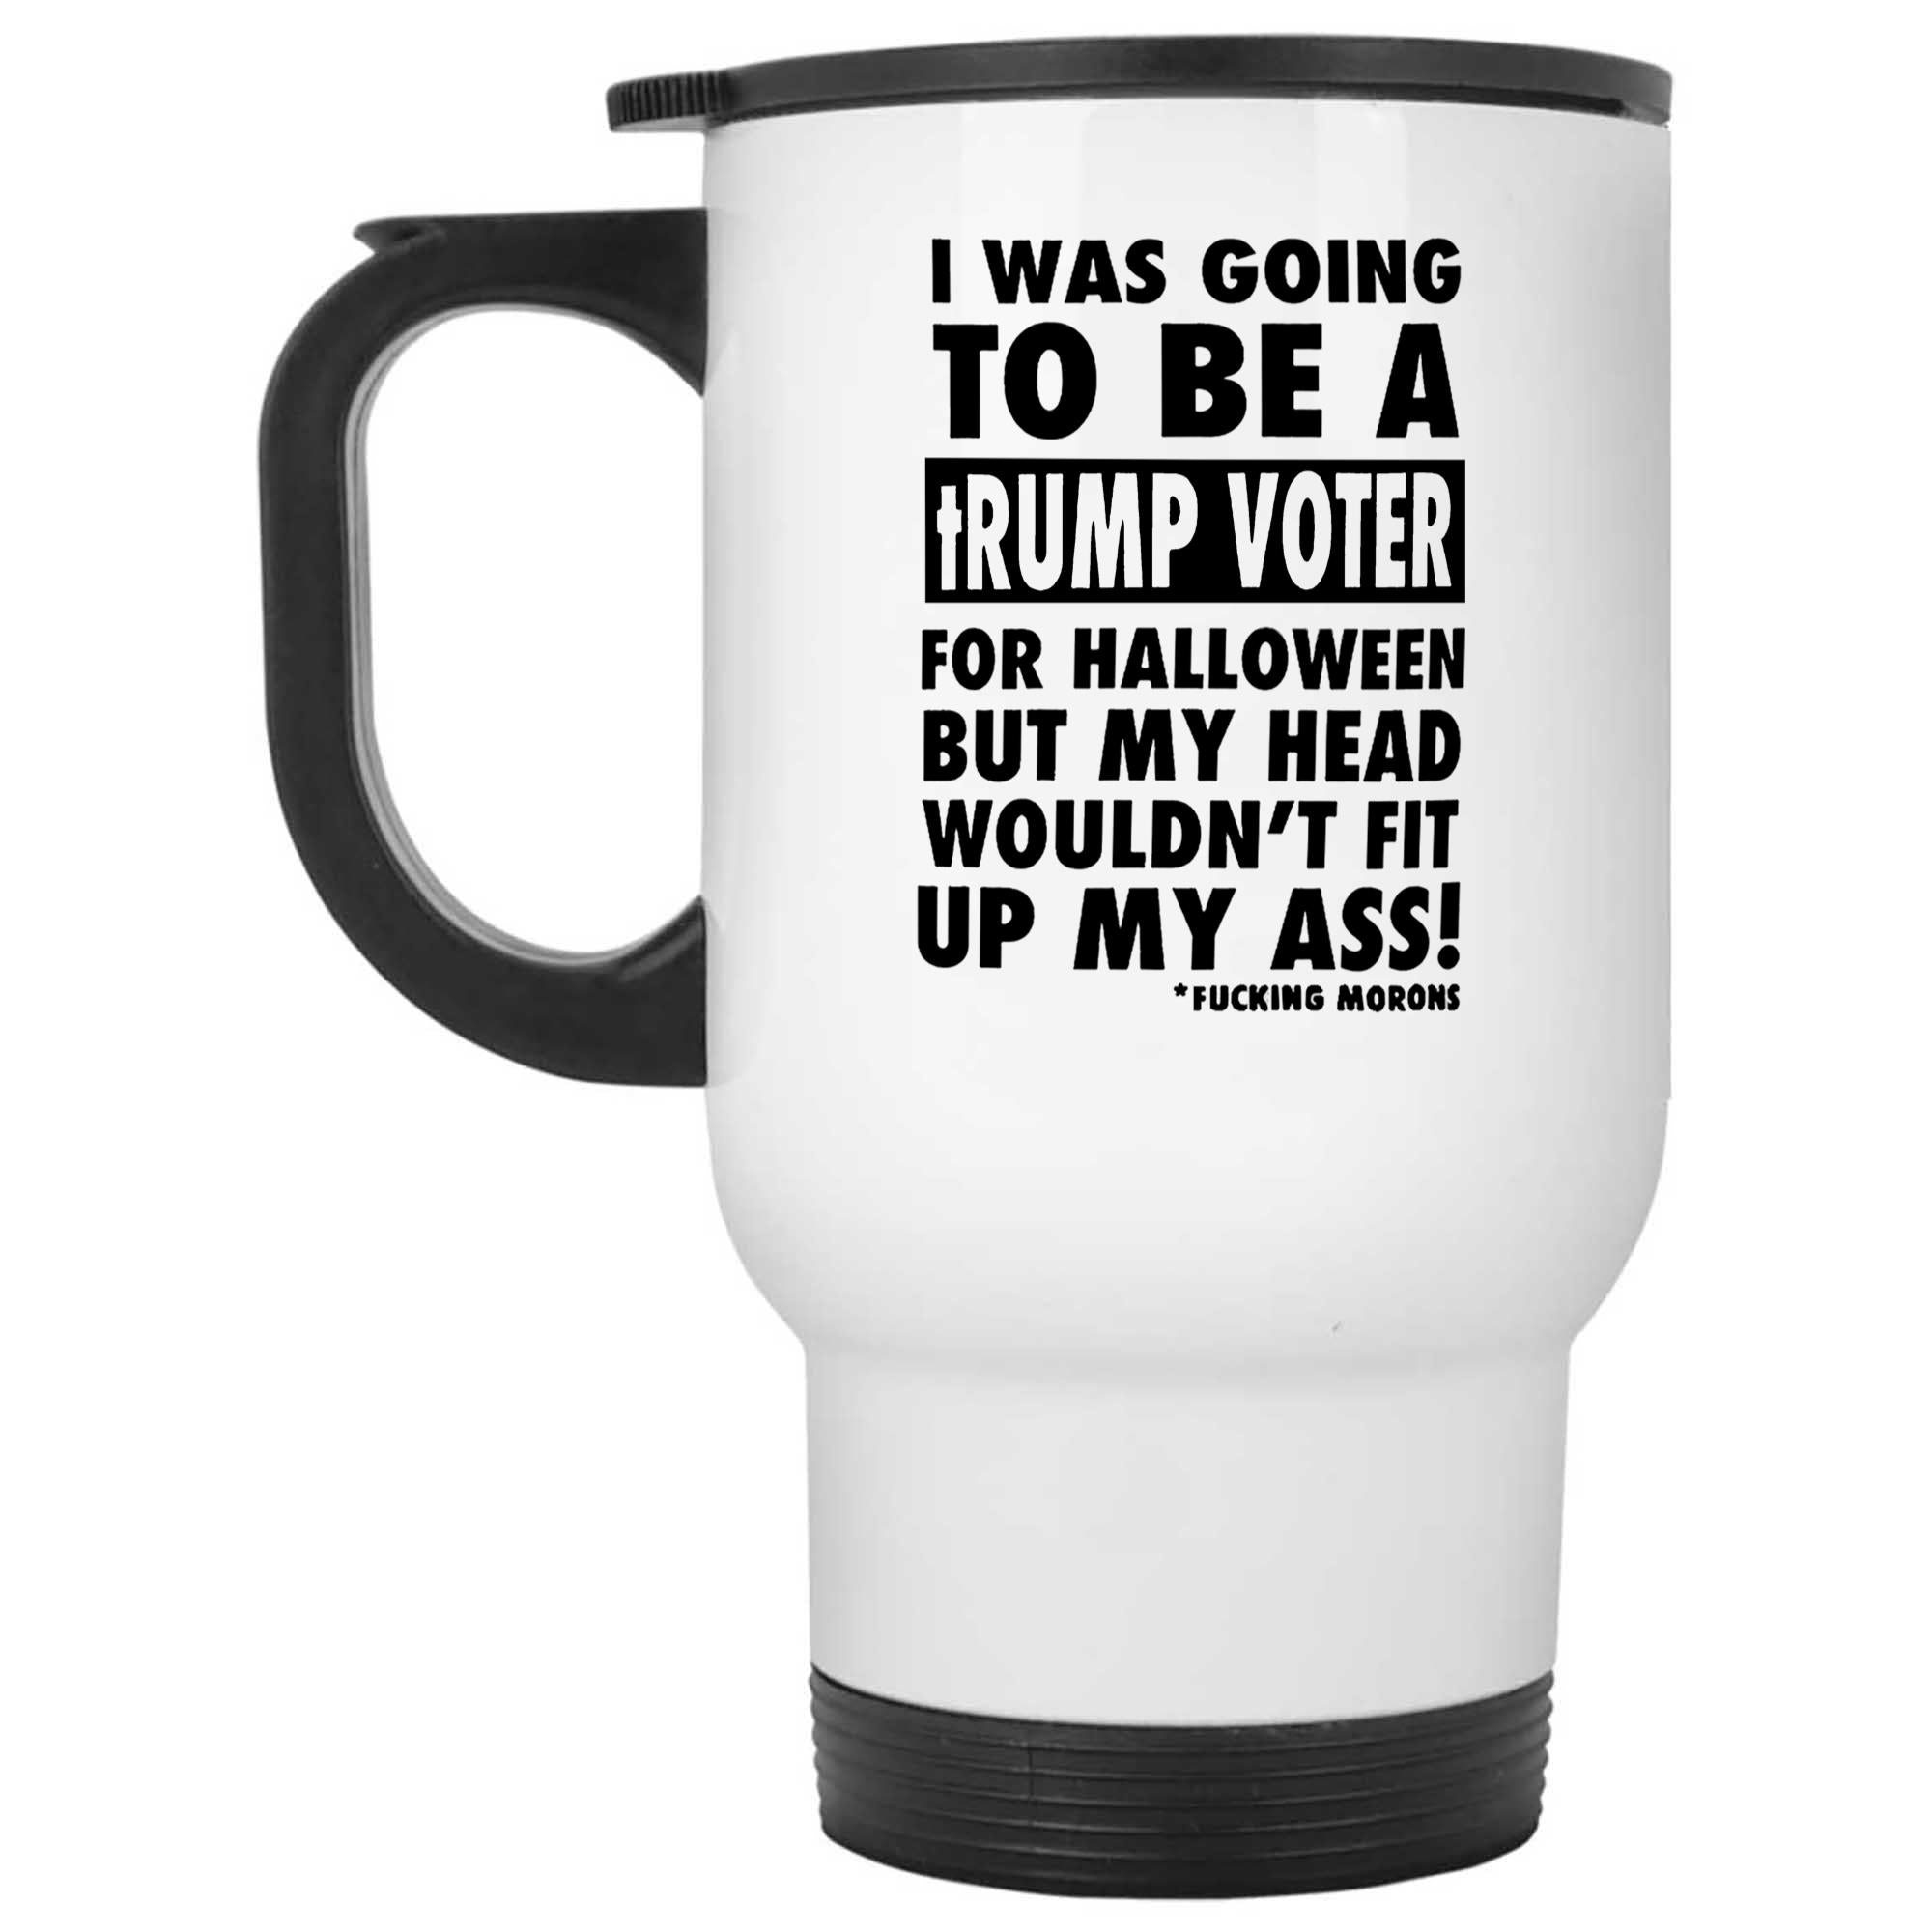 Skitongifts Funny Ceramic Novelty Coffee Mug Donald Trump Voter Halloween ismUqRe